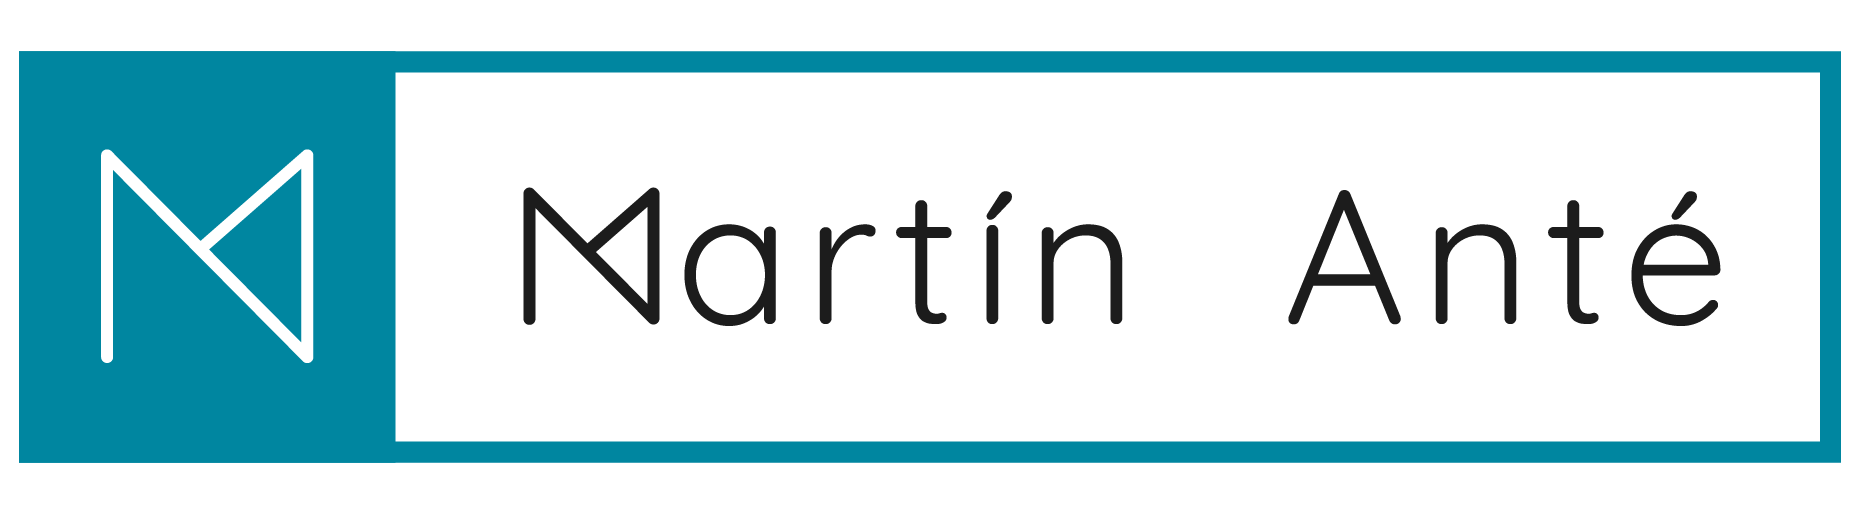 Martin Ante